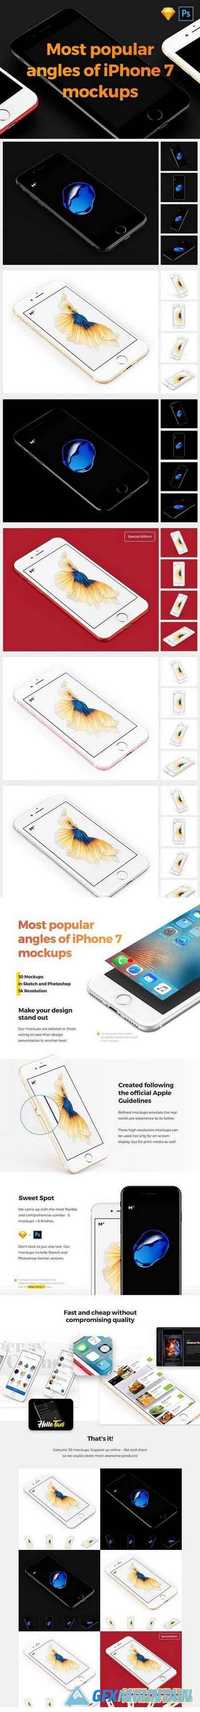 Most Popular iPhone 7 Mockups 1417012